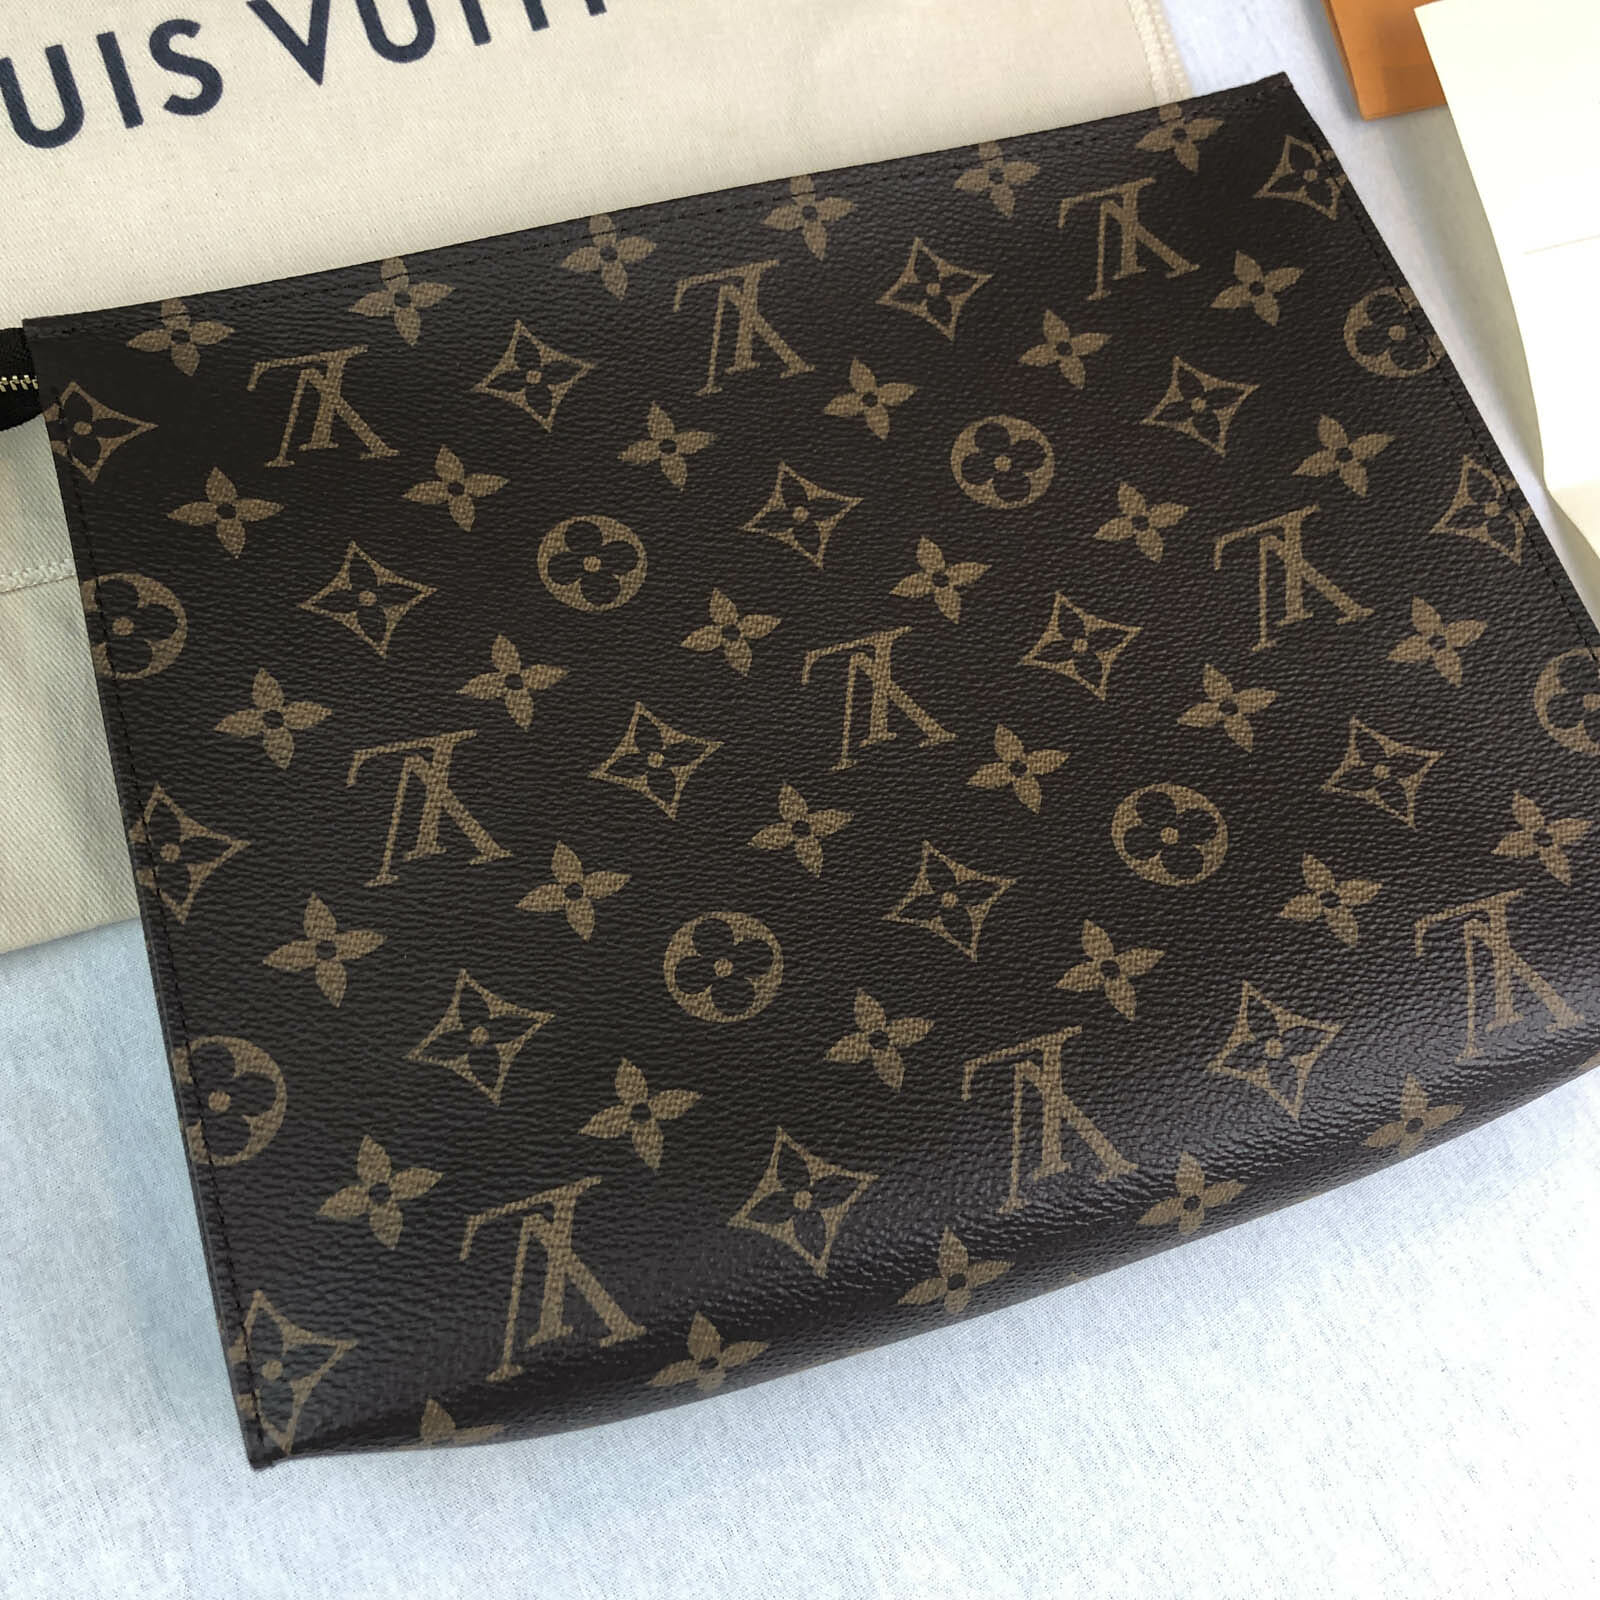 Louis Vuitton Toiletry Pouch 26 Monogram Clutch Bag - Handbagholic